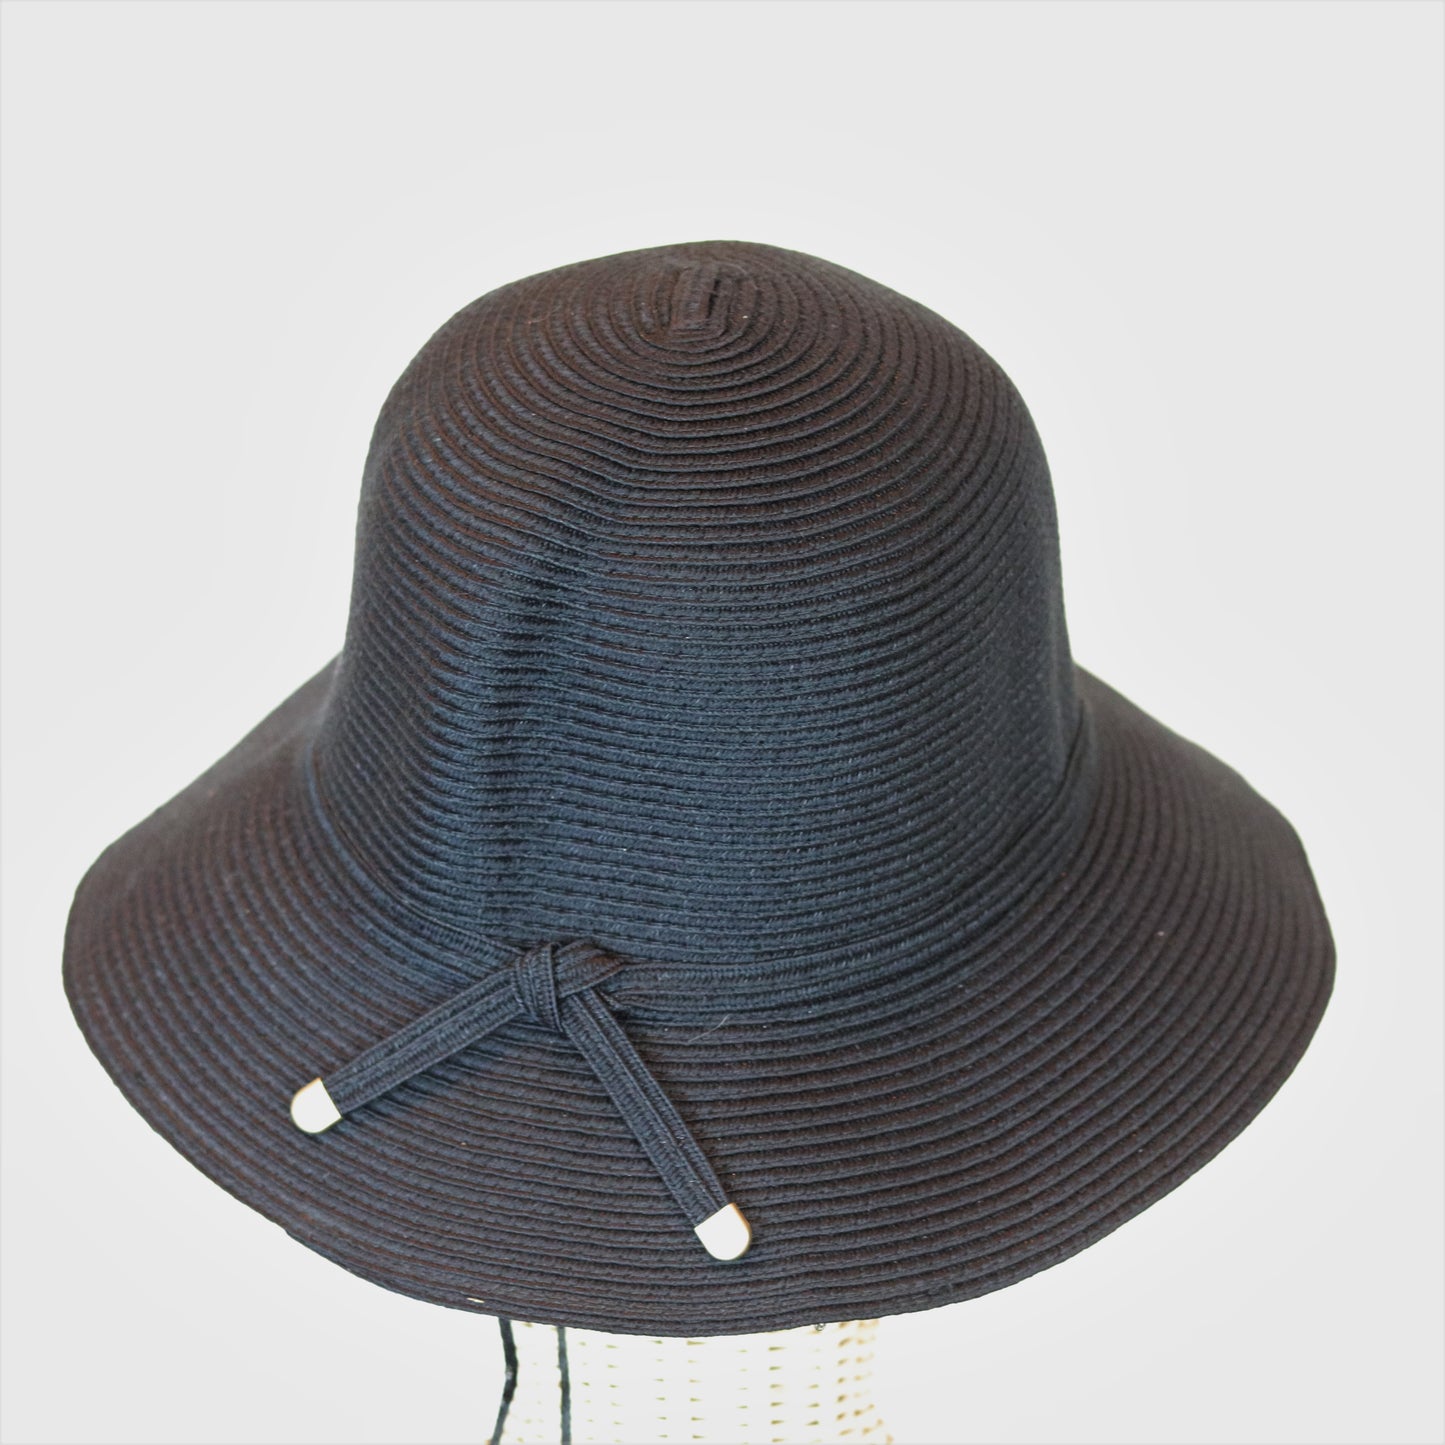 Lisbon Hat